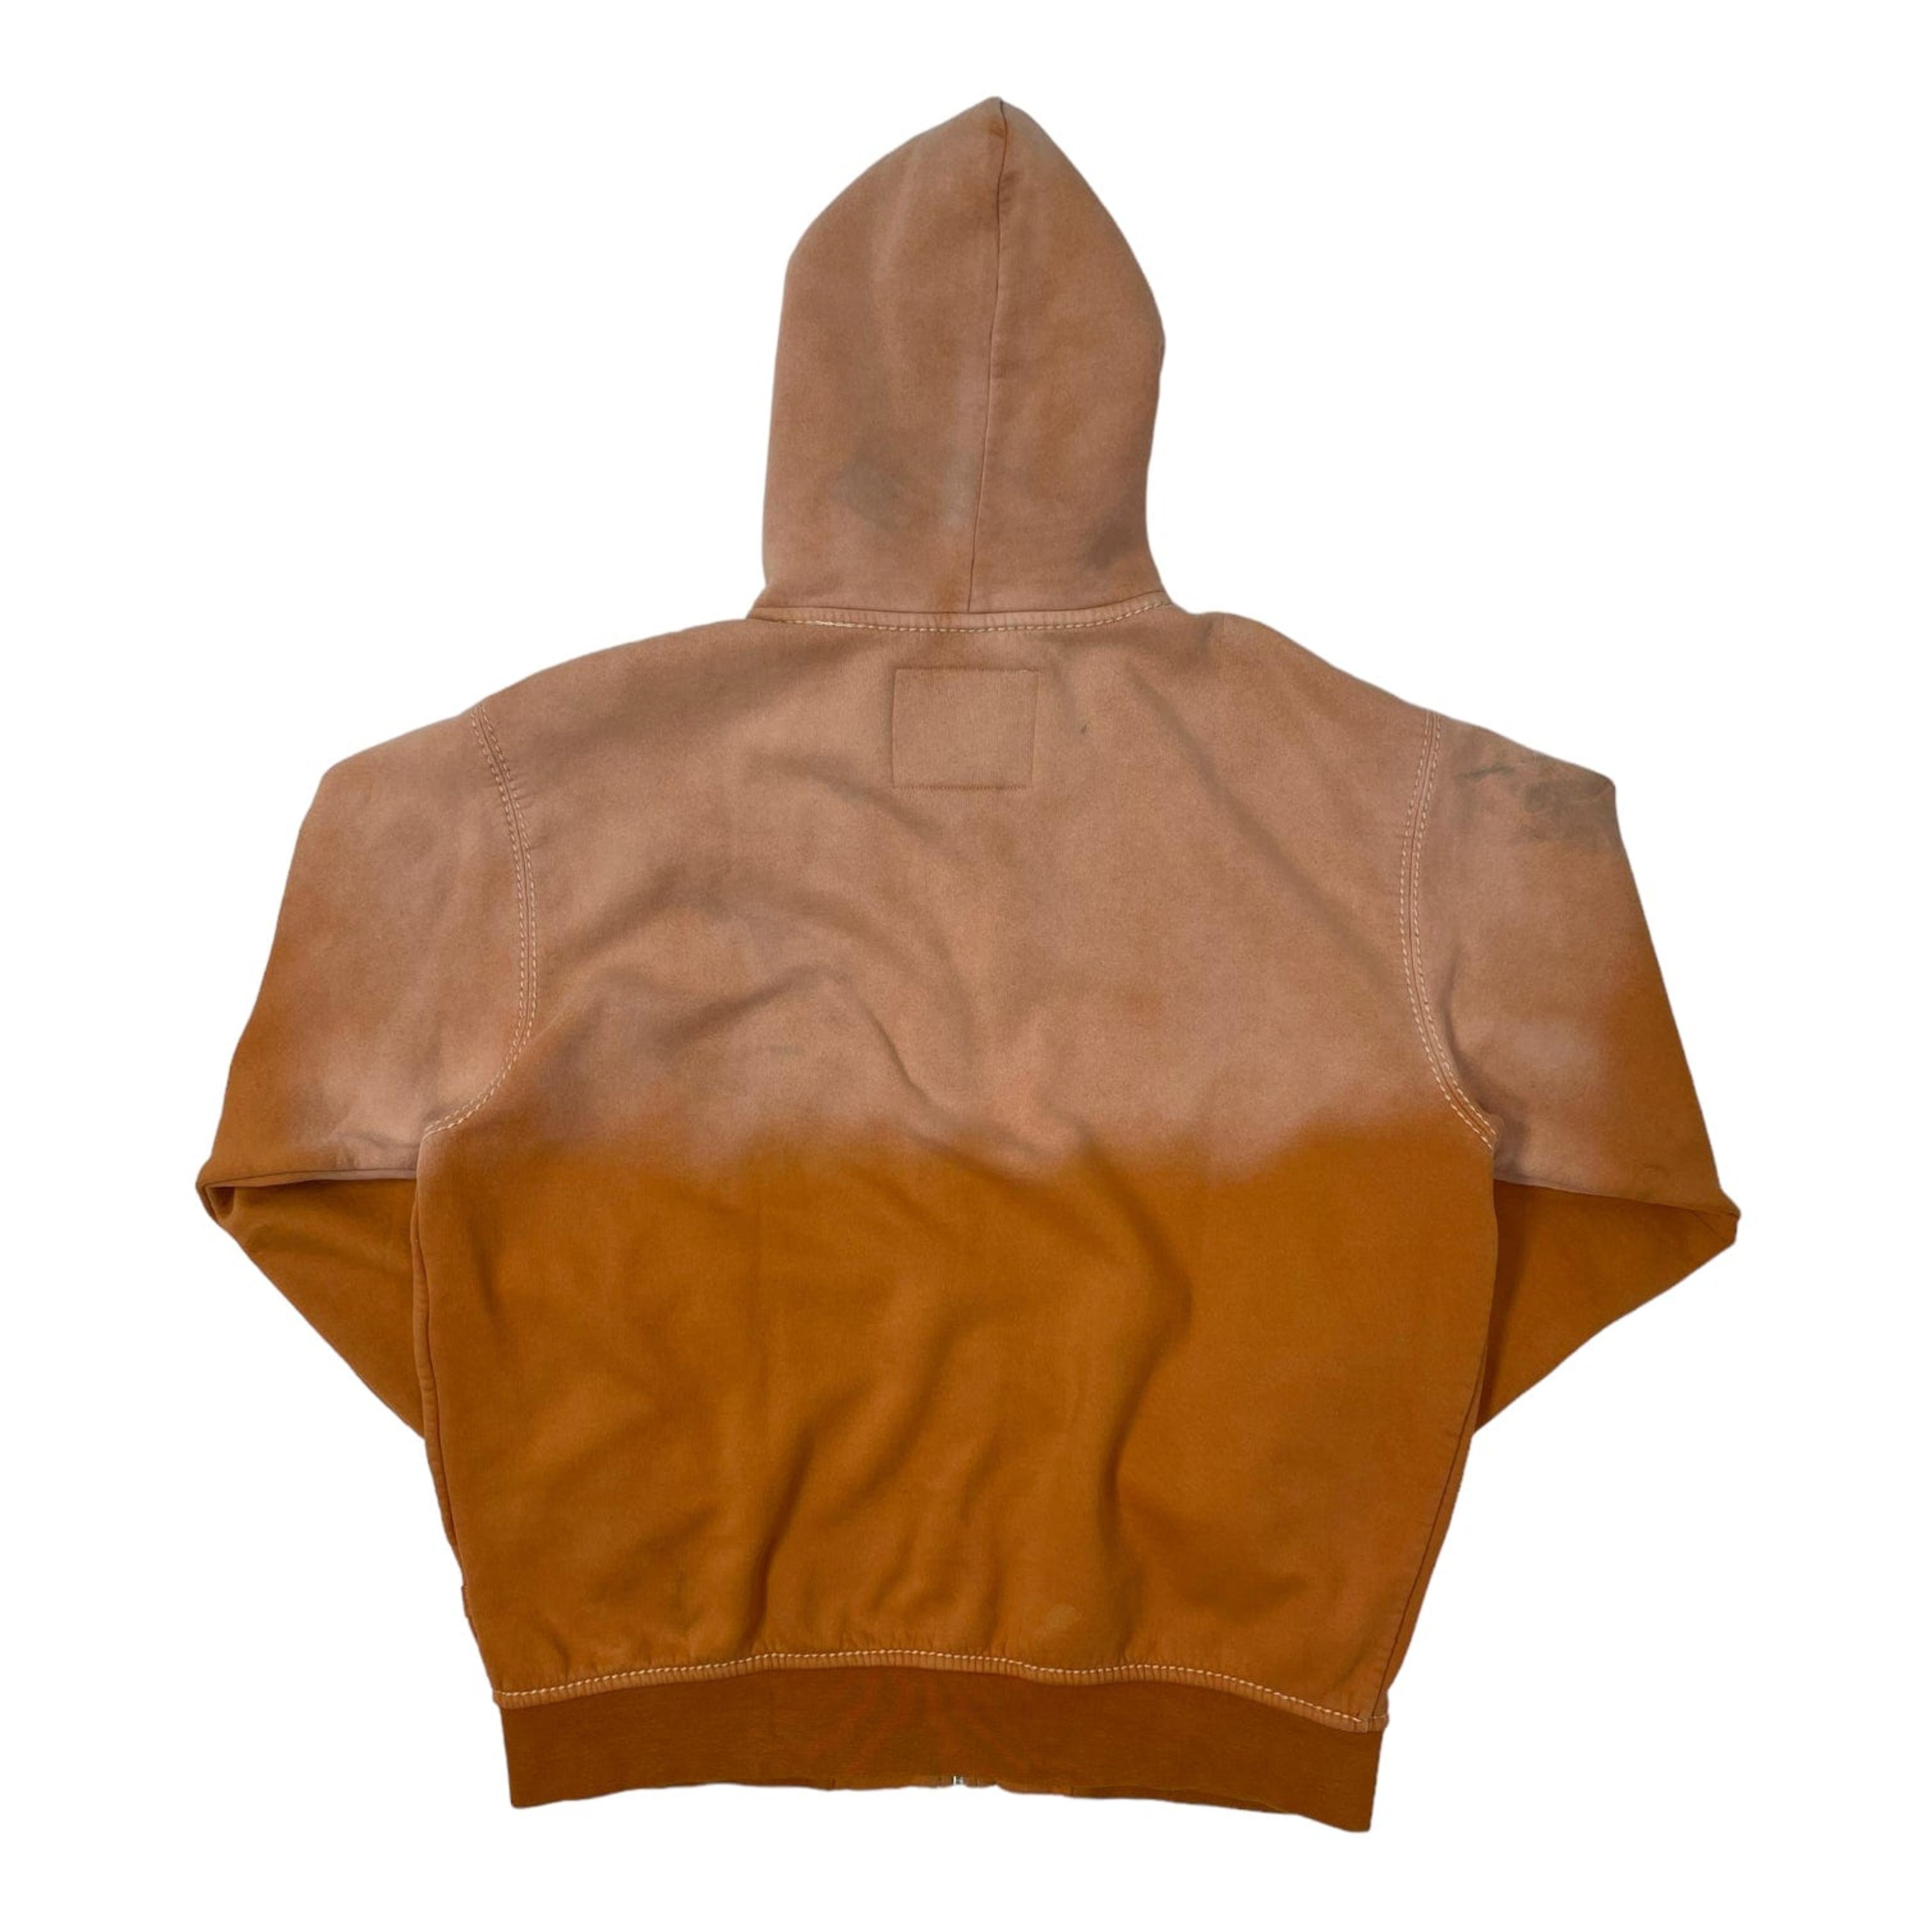 Alternate View 1 of Supreme True Religion Zip Up Hooded Sweatshirt Dusty Orange Pre-